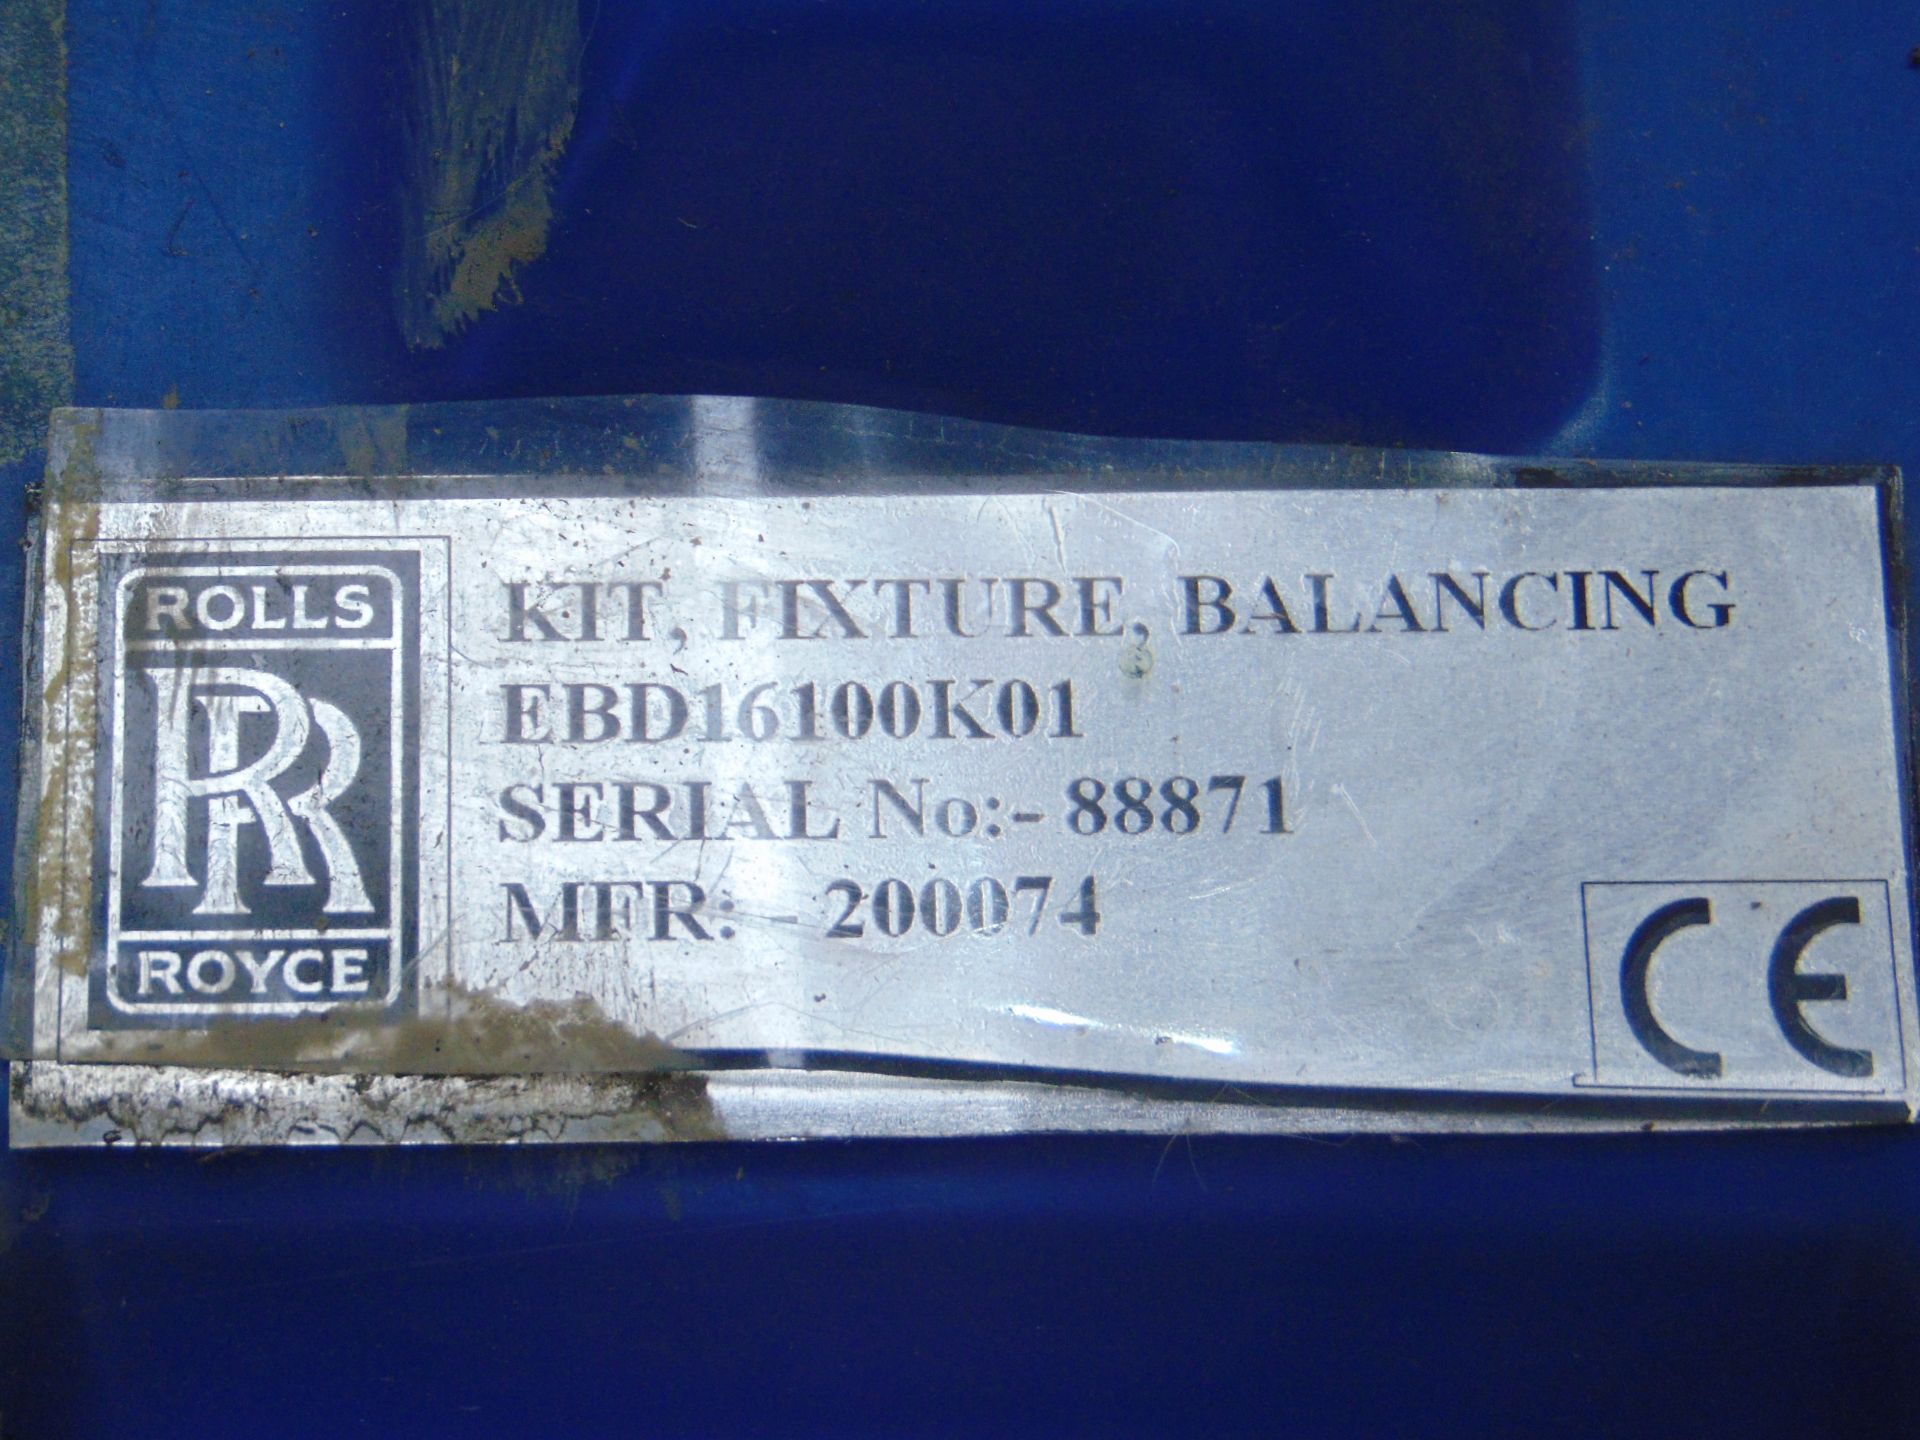 ROLLS ROYCE KIT FIXTURE BALANCING IN TRANSIT CASE - Image 4 of 6